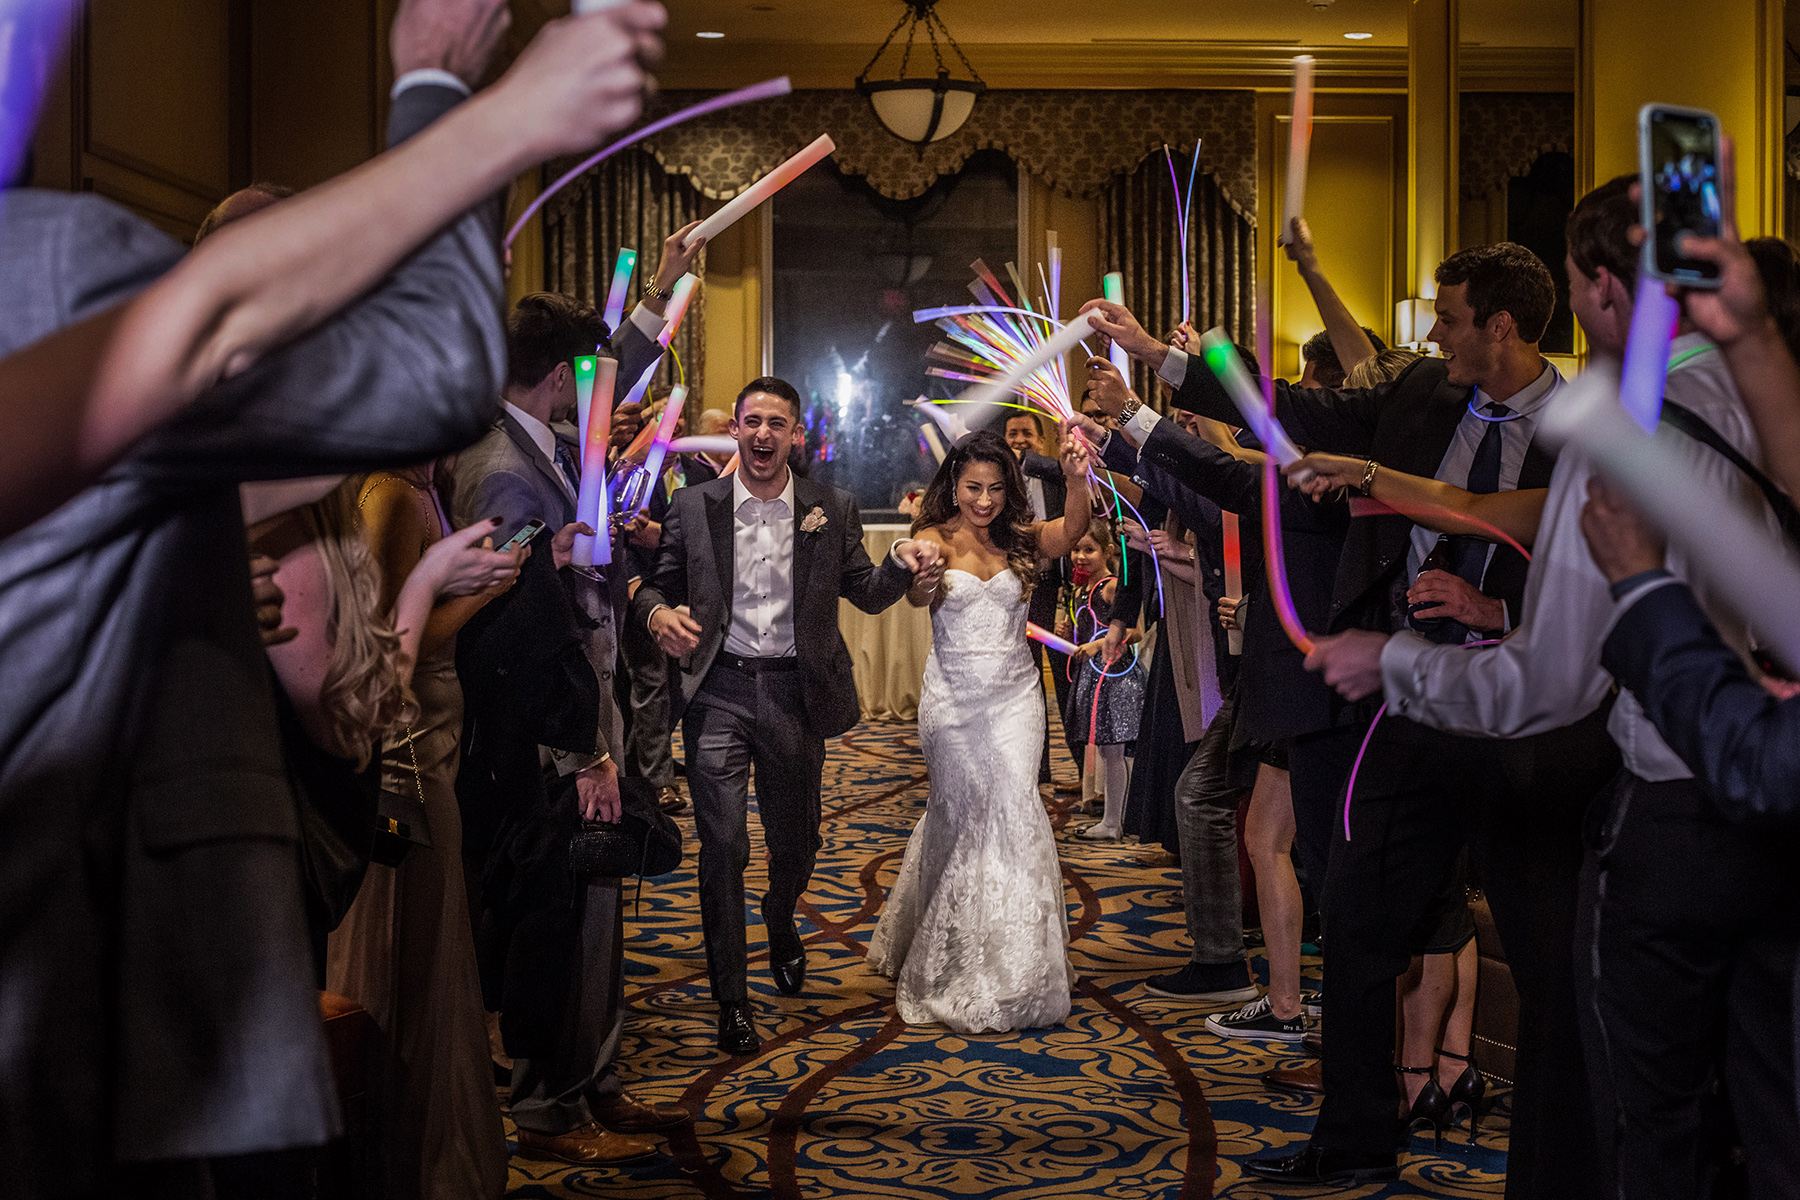 leaving the wedding - sendoff - glow sticks - hotel houston